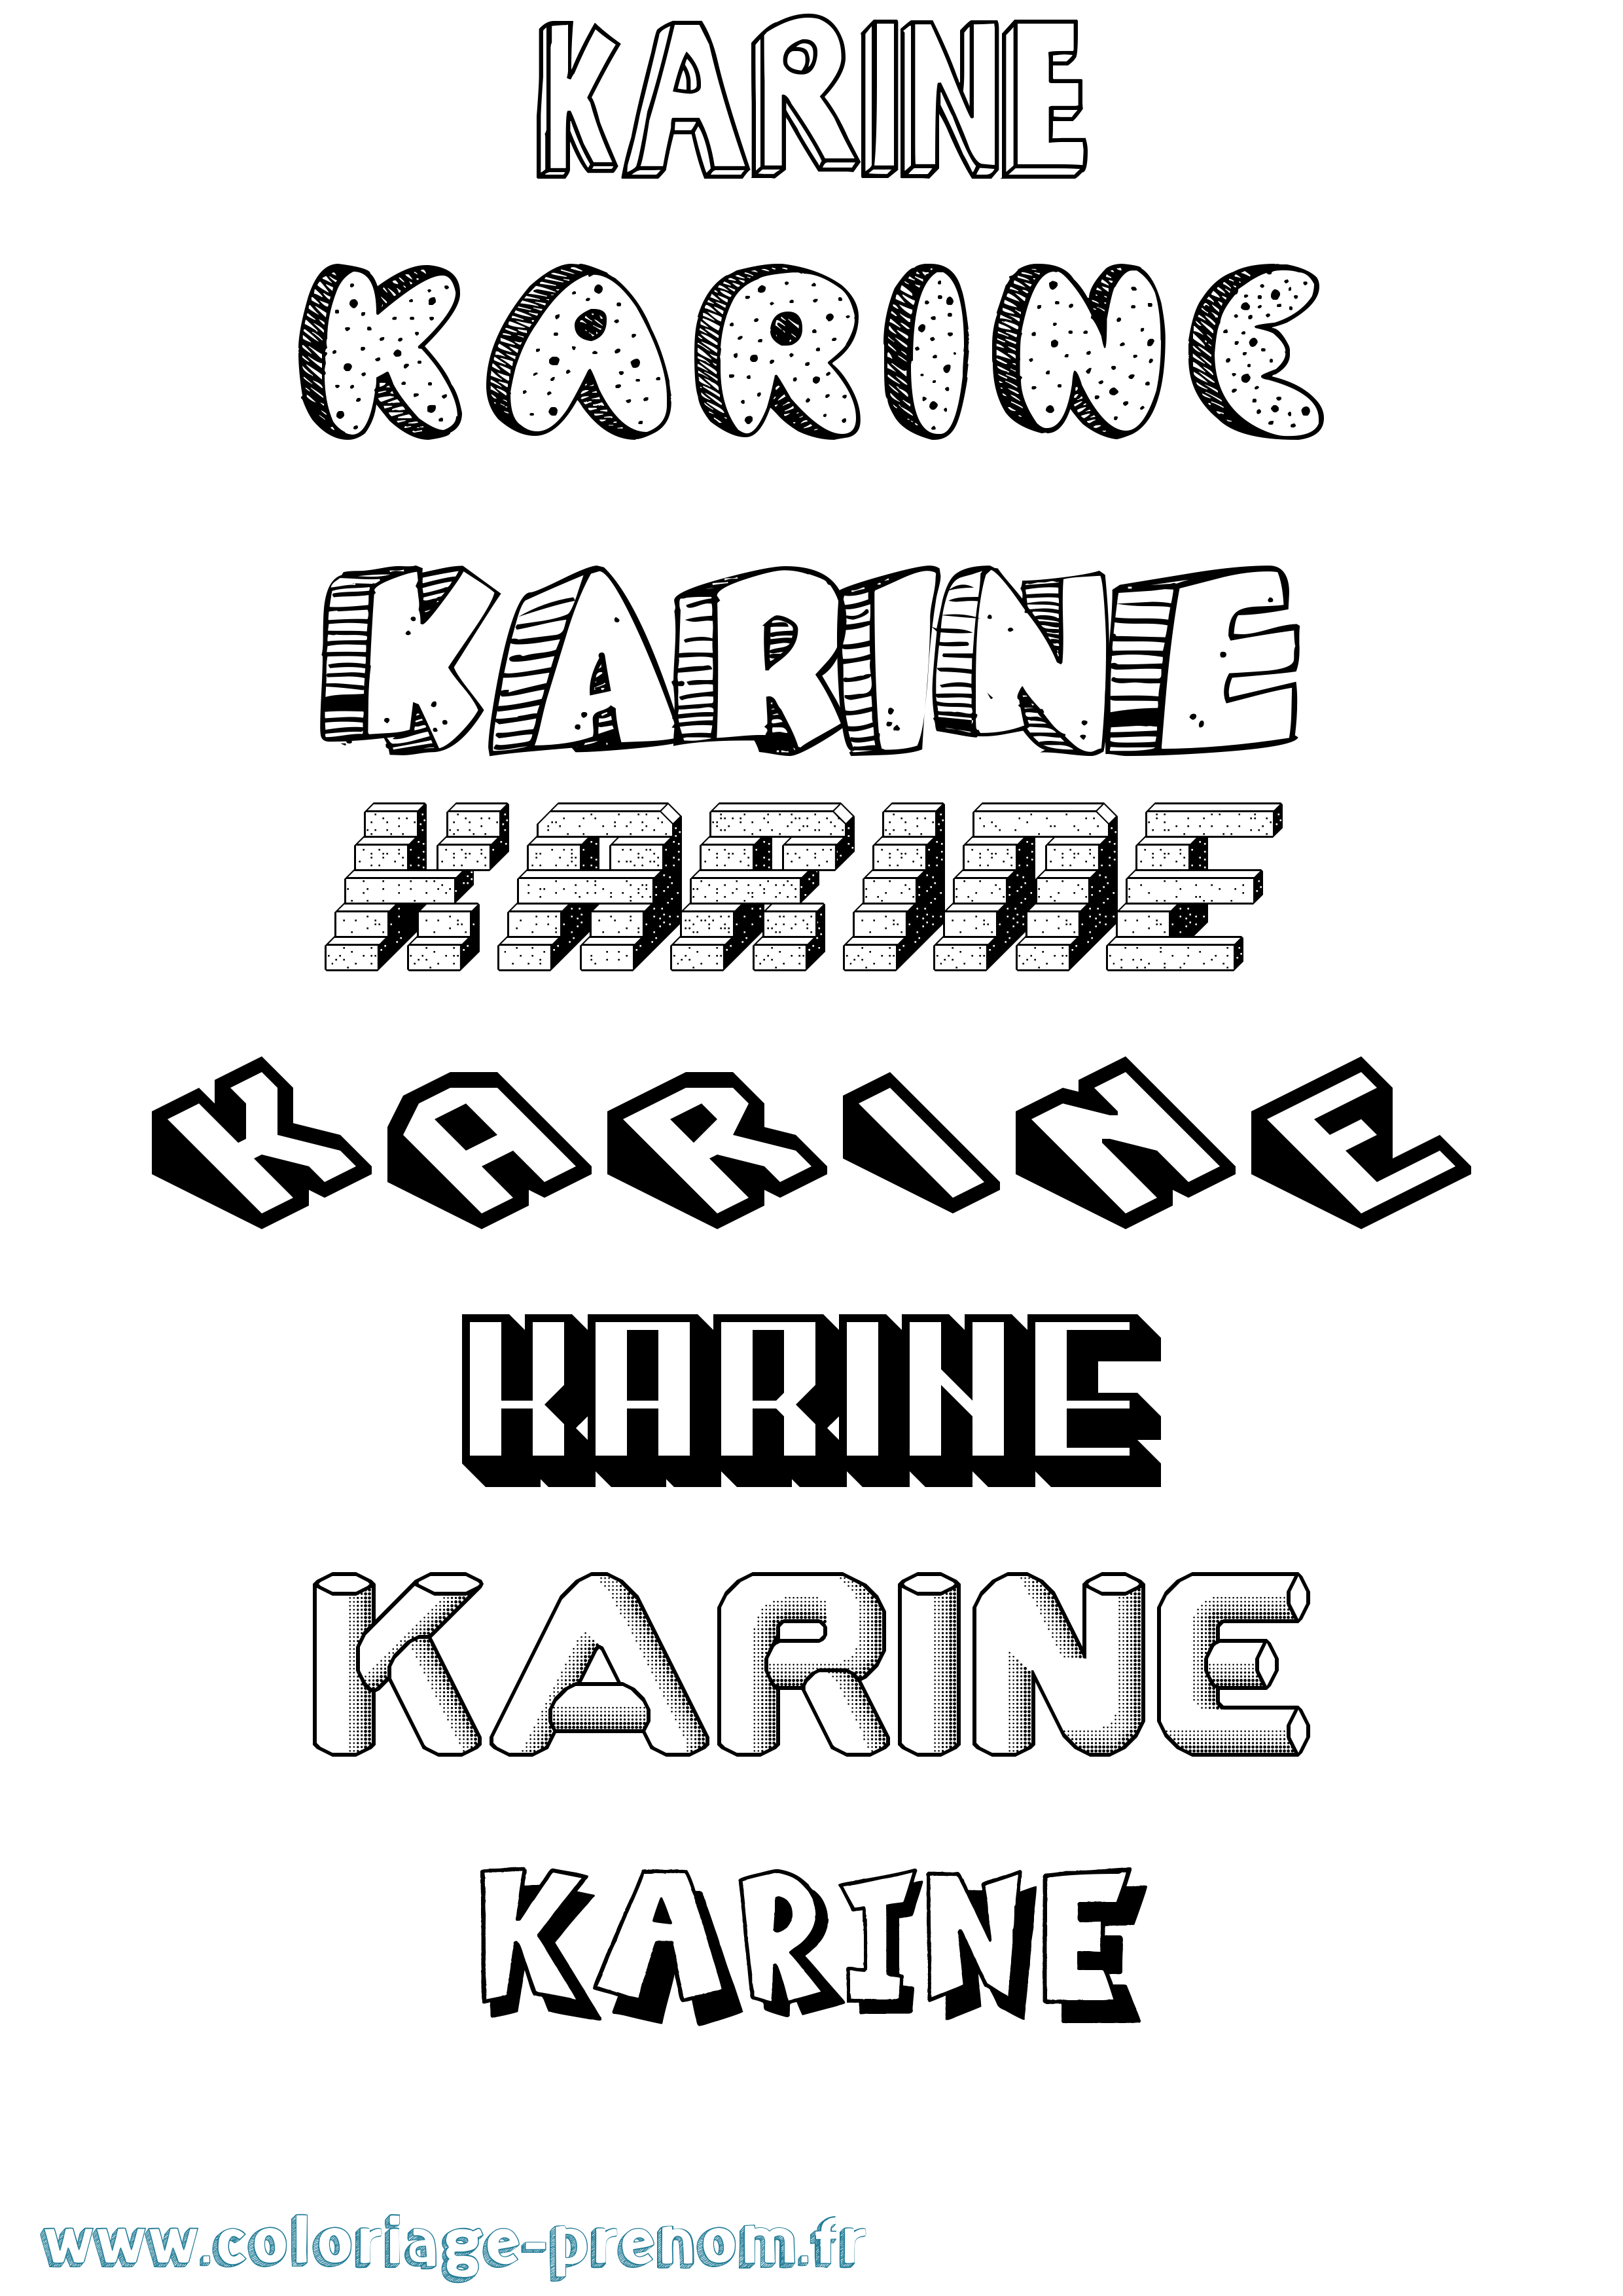 Coloriage prénom Karine